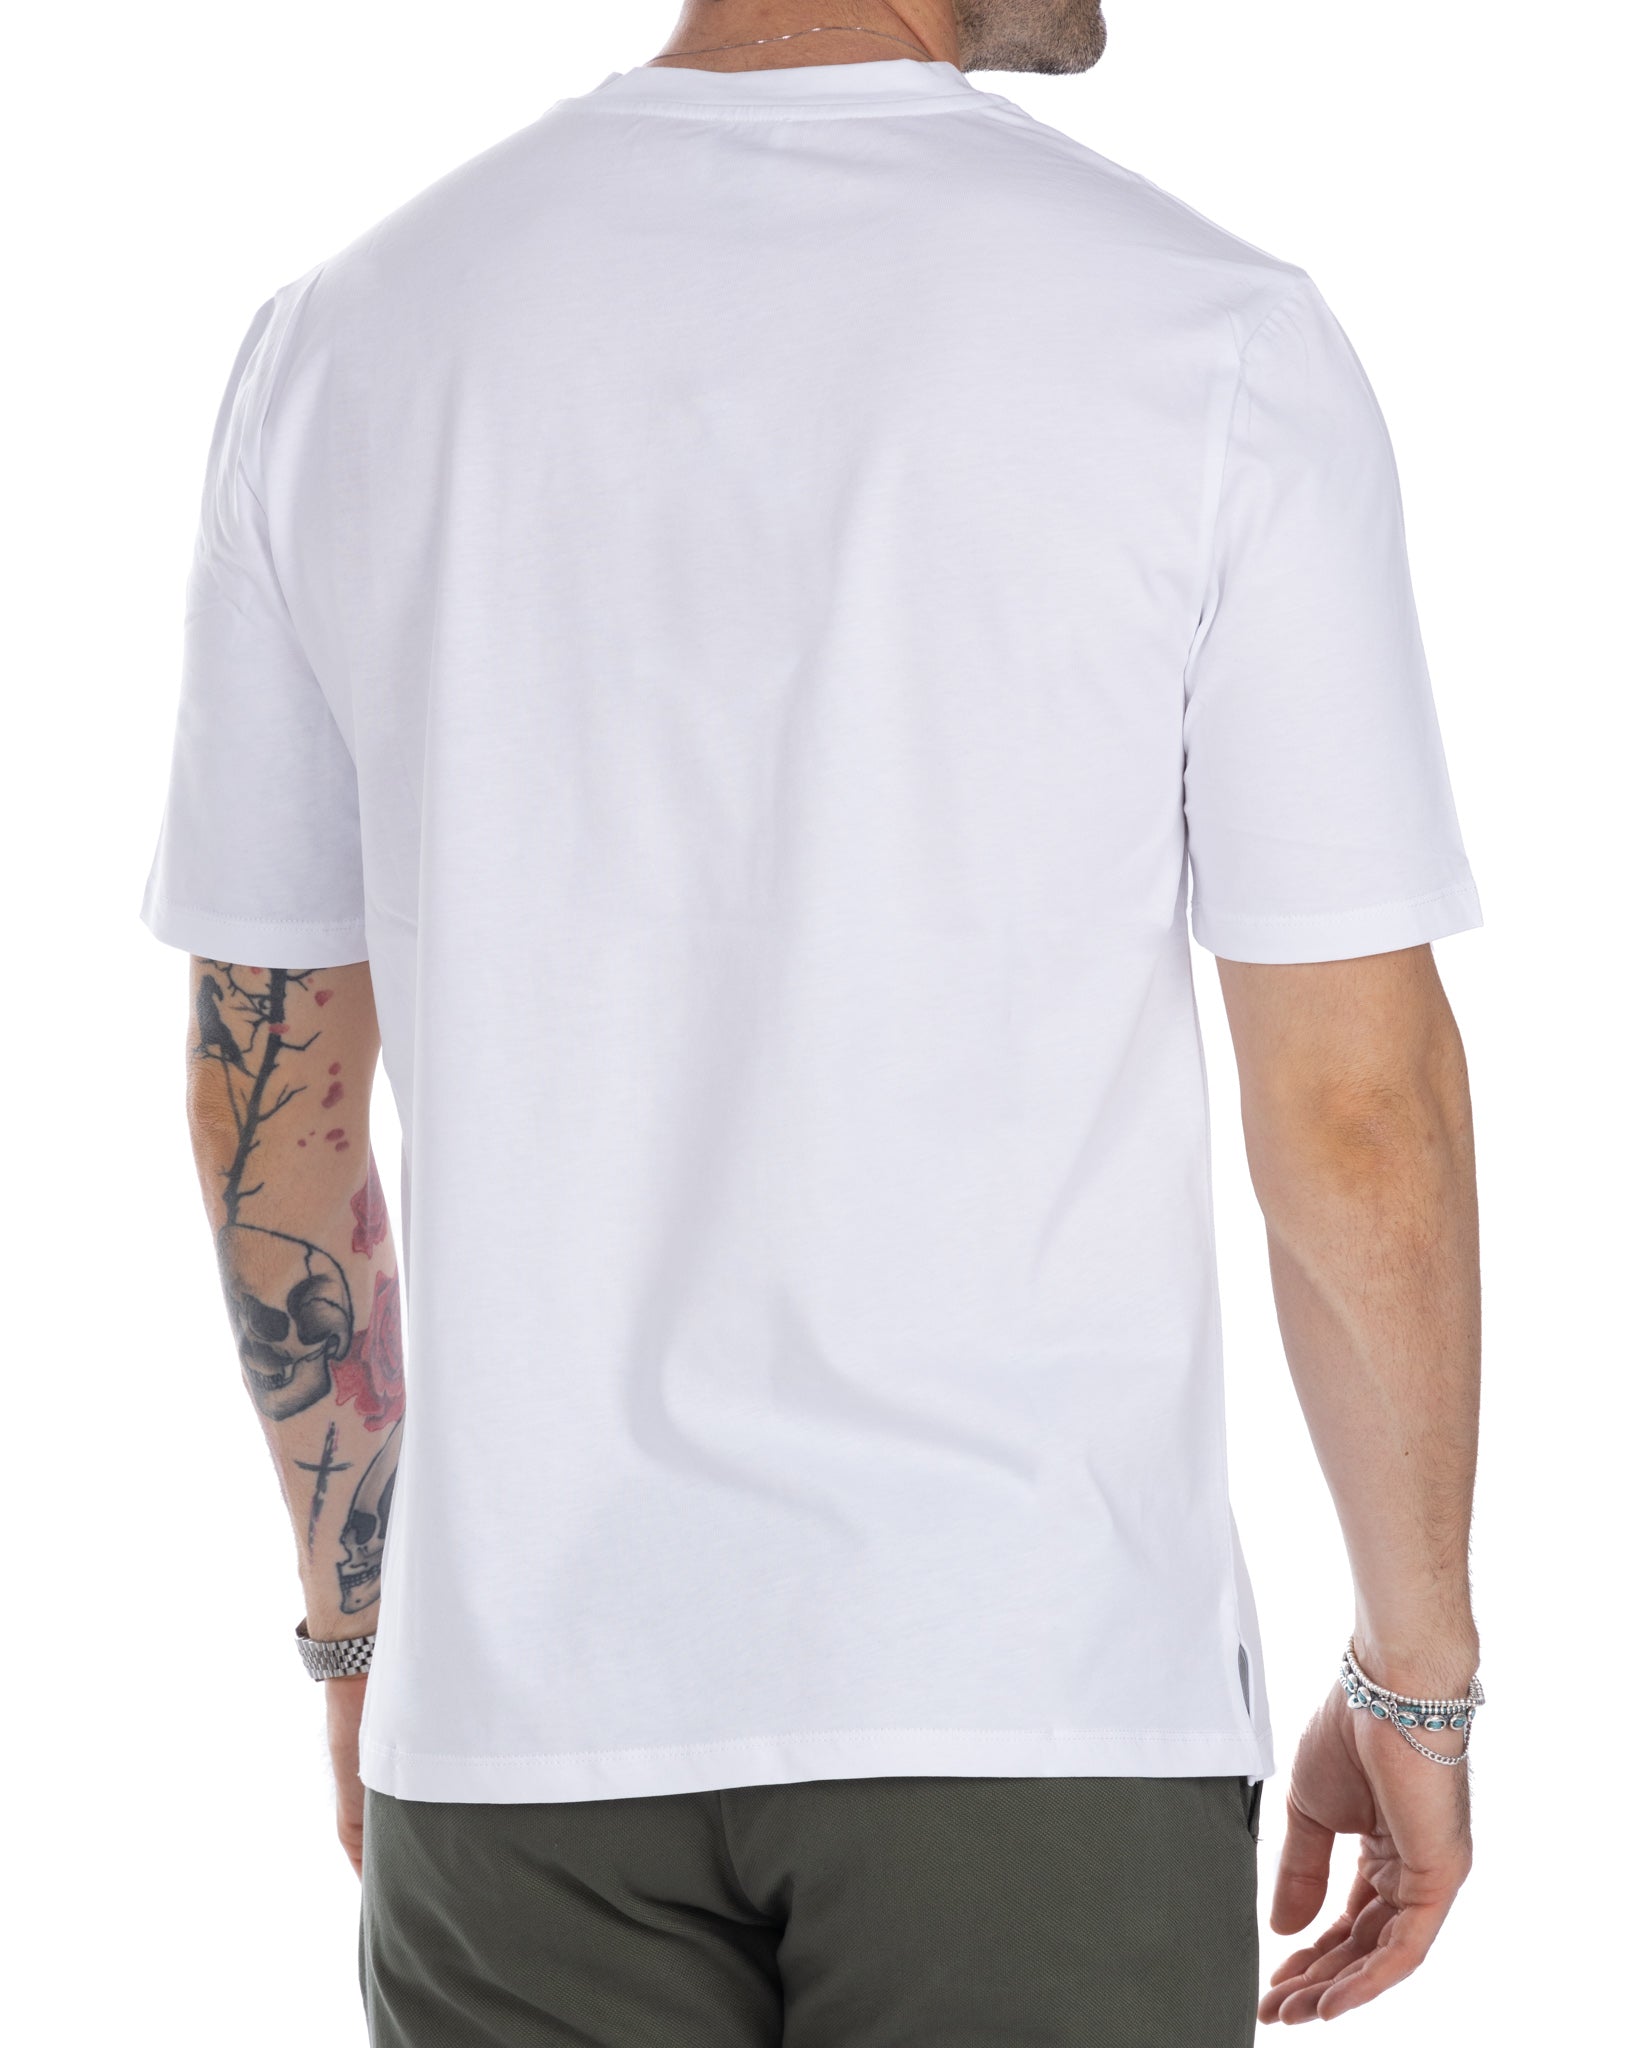 Tee - basic white cotton t-shirt